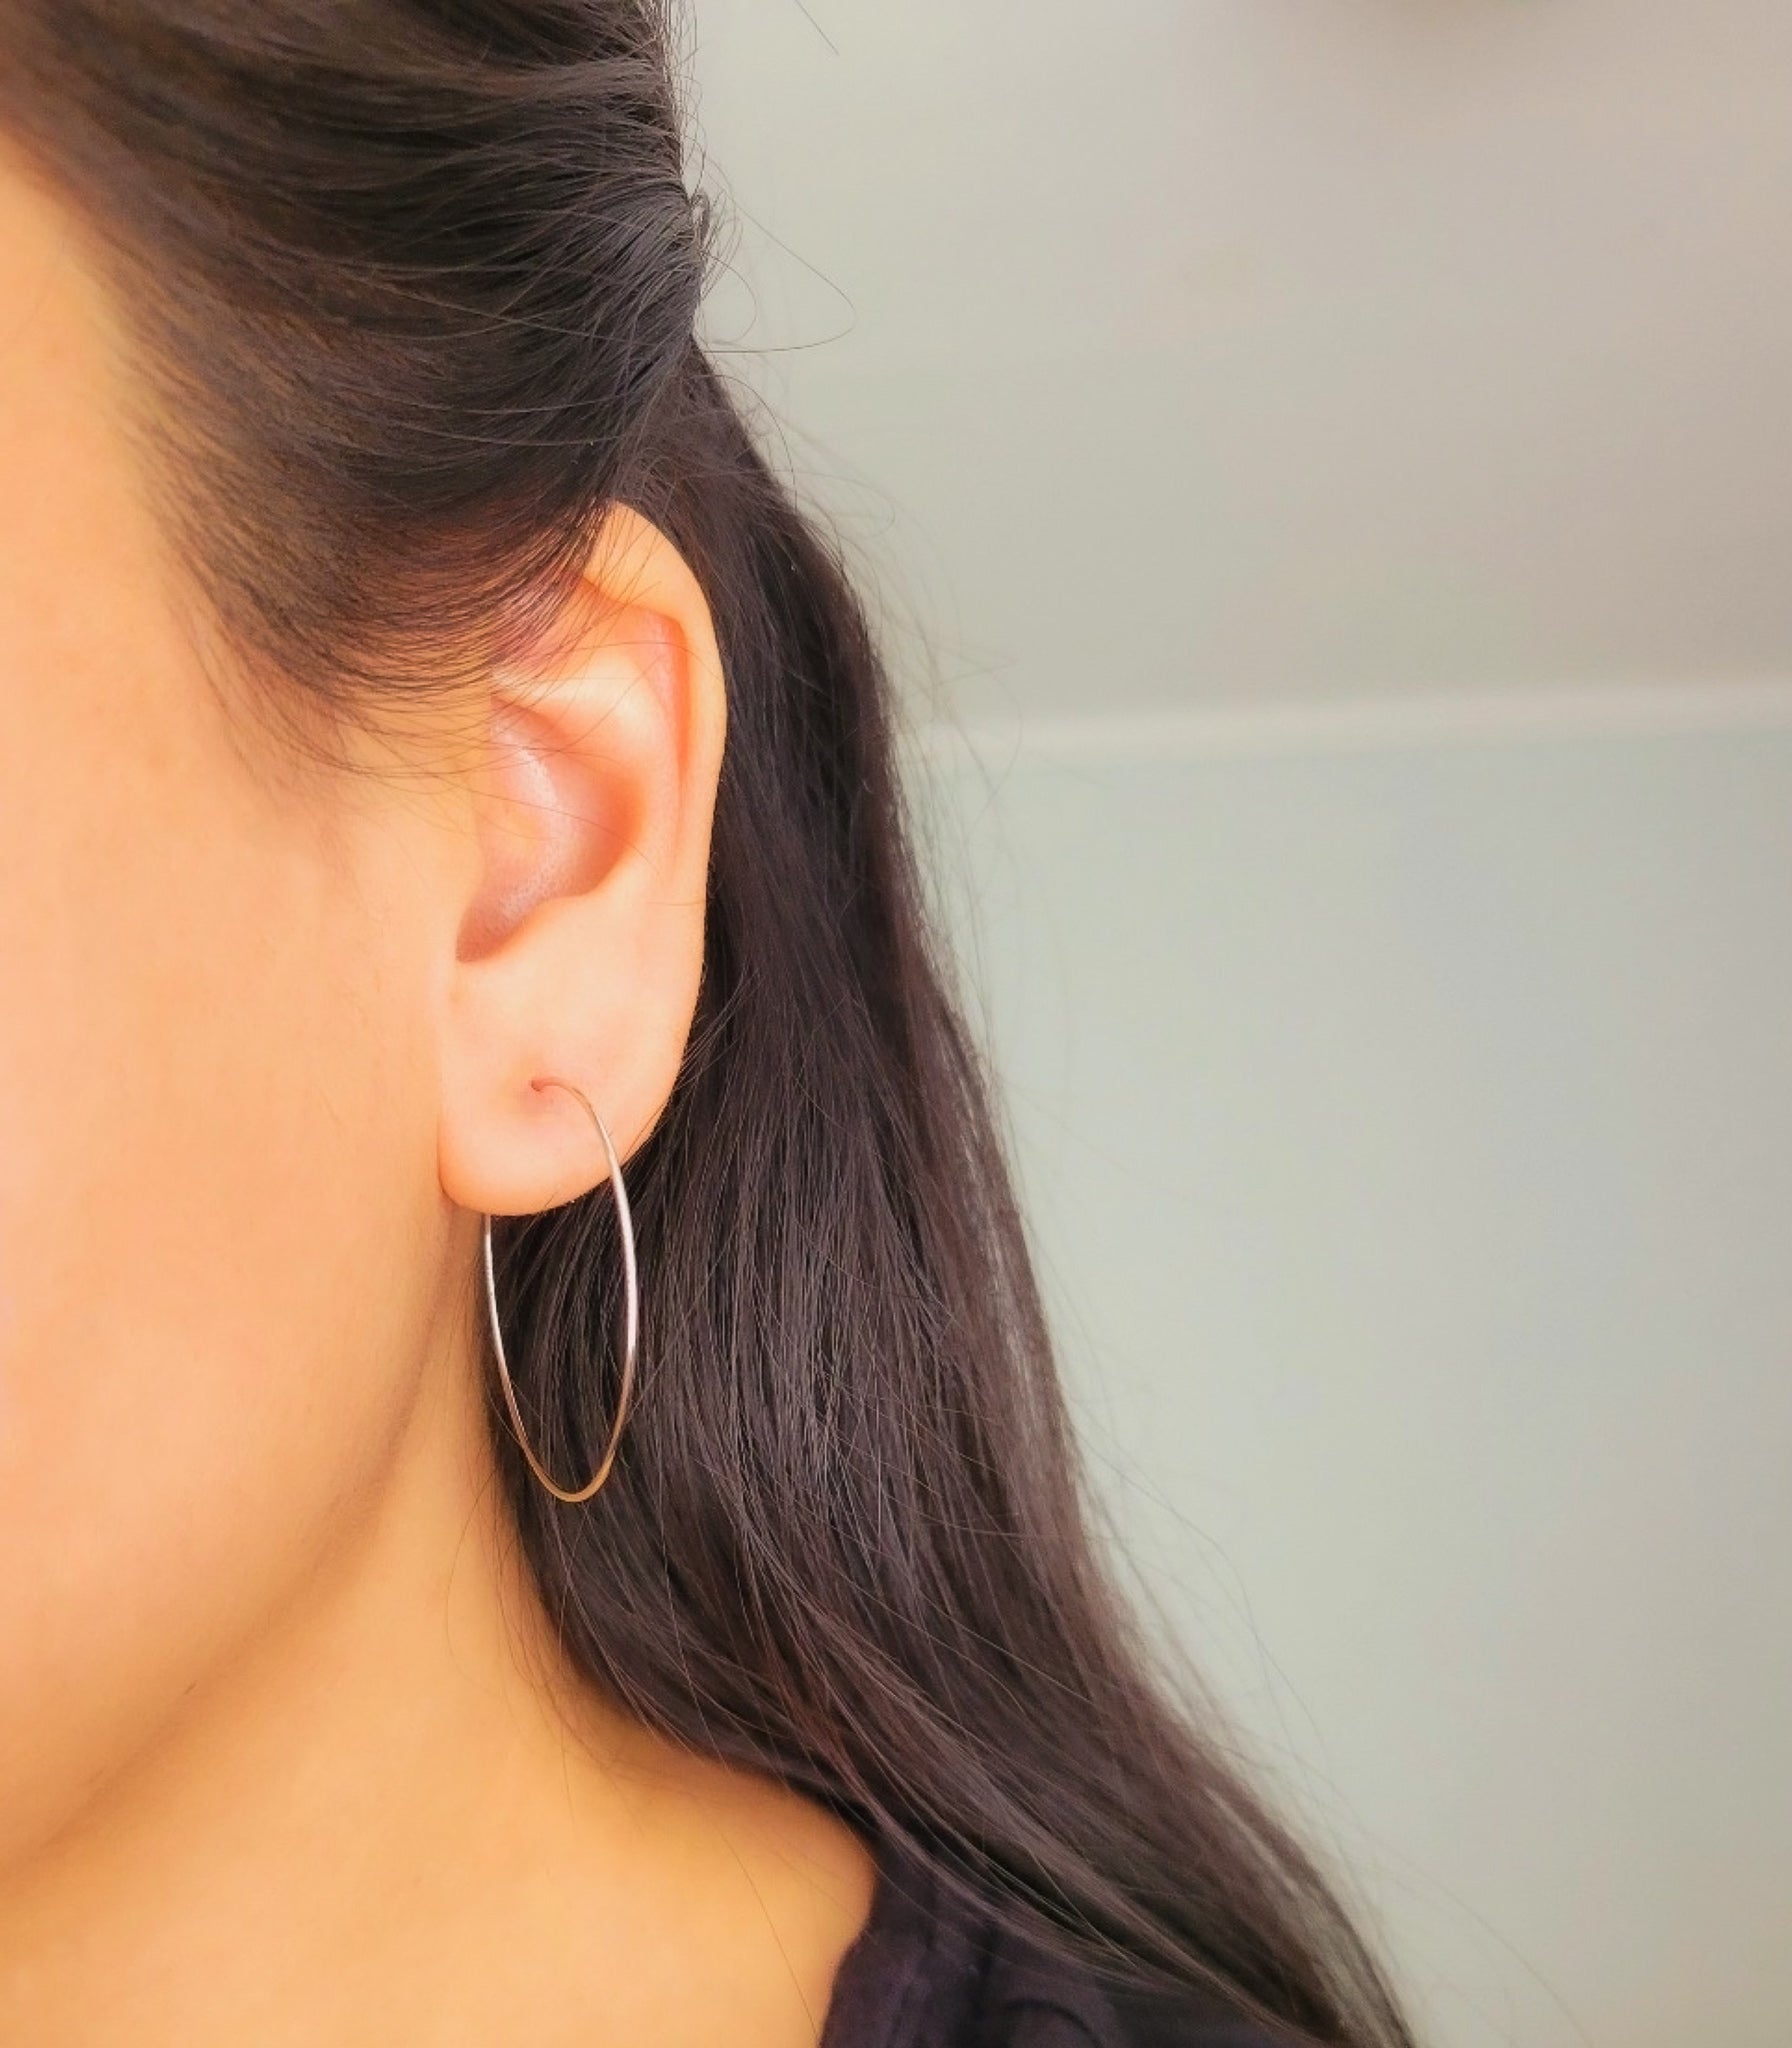 Minimalist silver hoop earrings